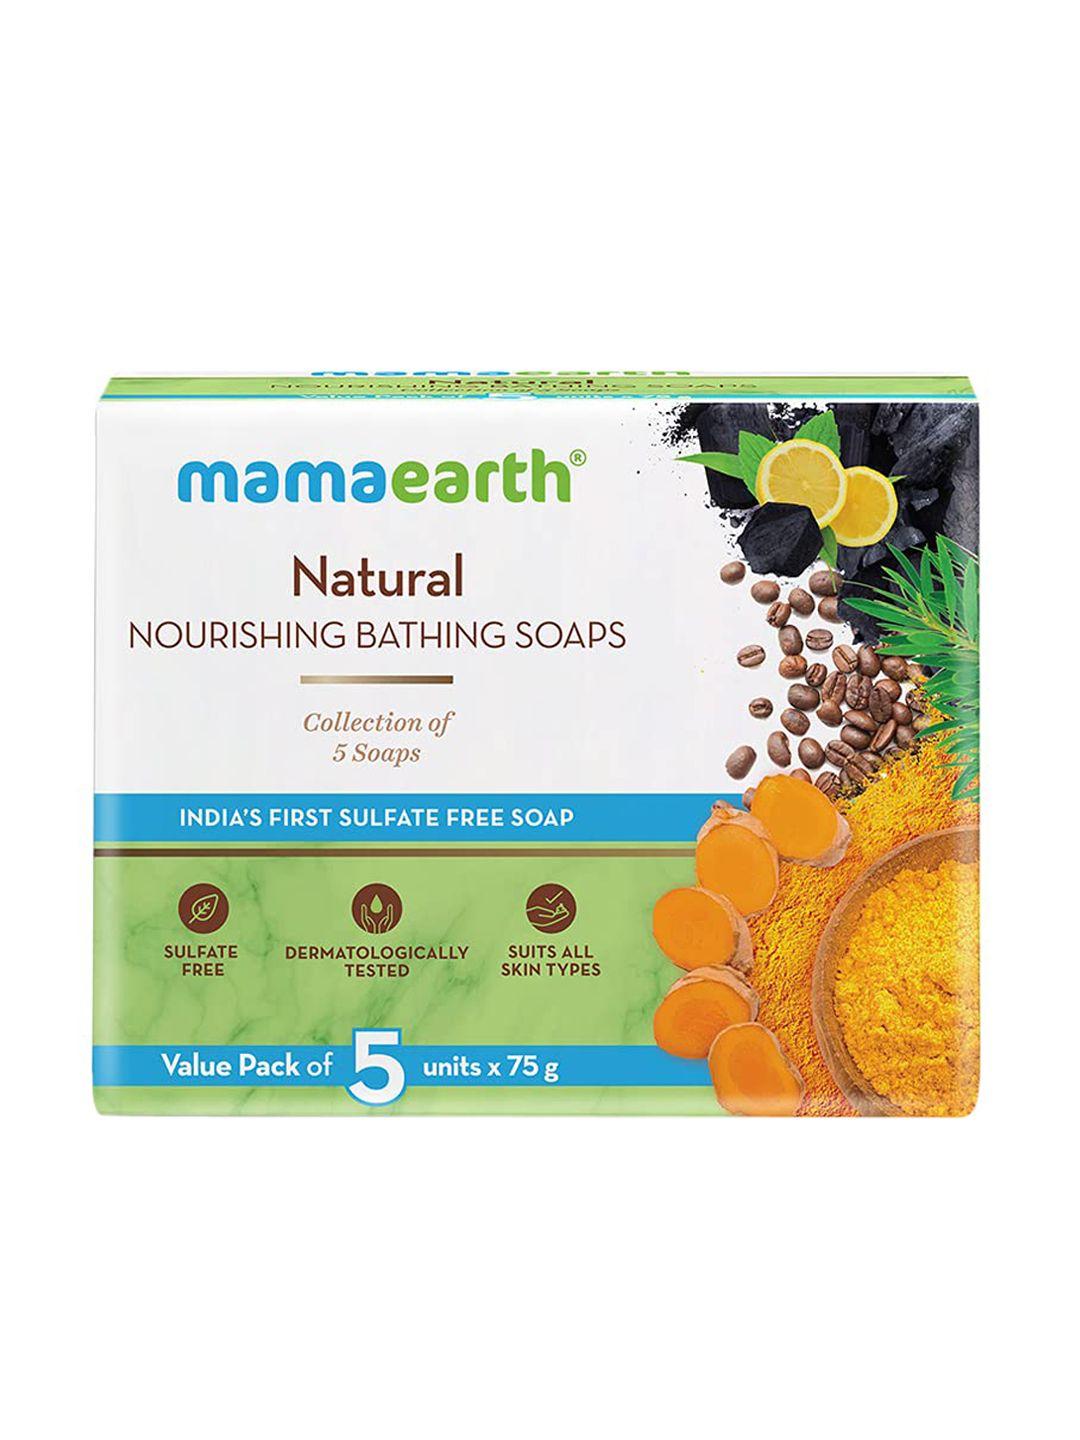 mamaearth natural nourishing bathing soaps- 75gm each